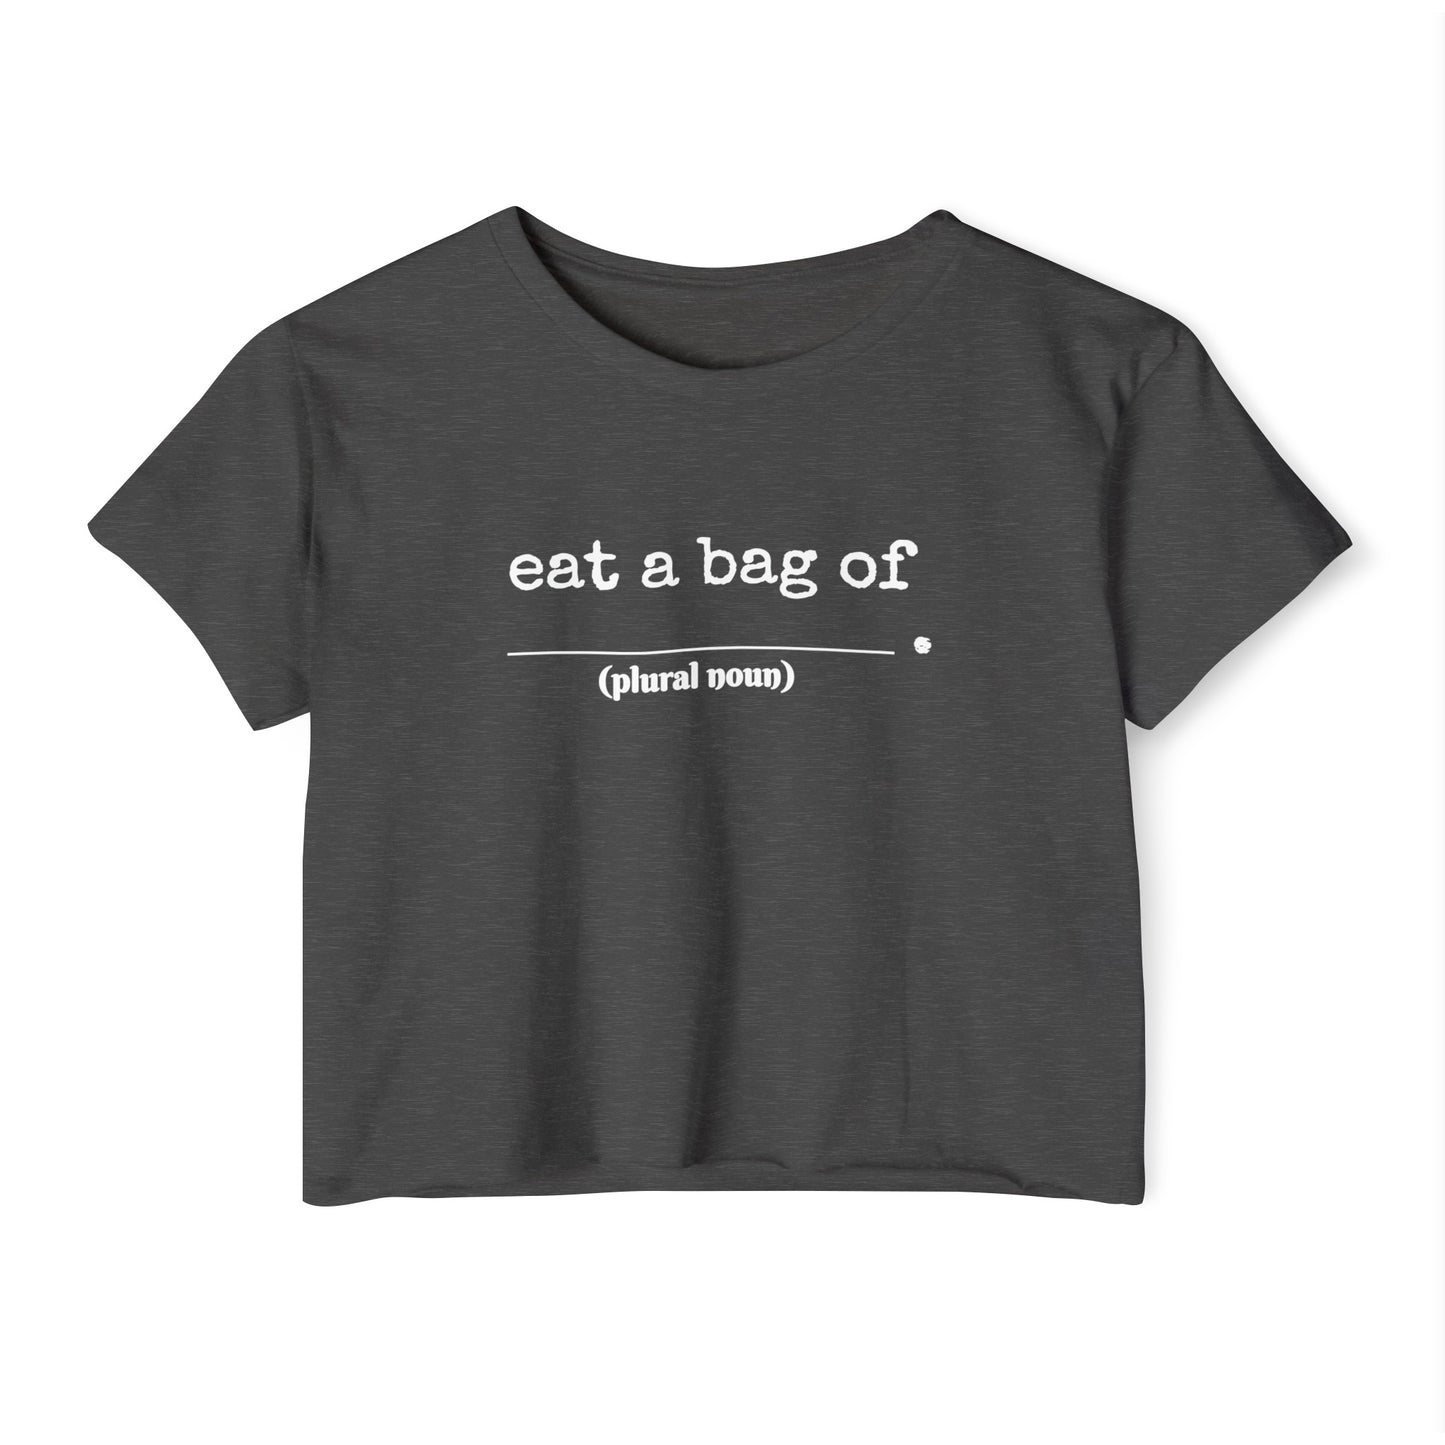 "Eat a bag of _______(plural noun)" Cropped Tee